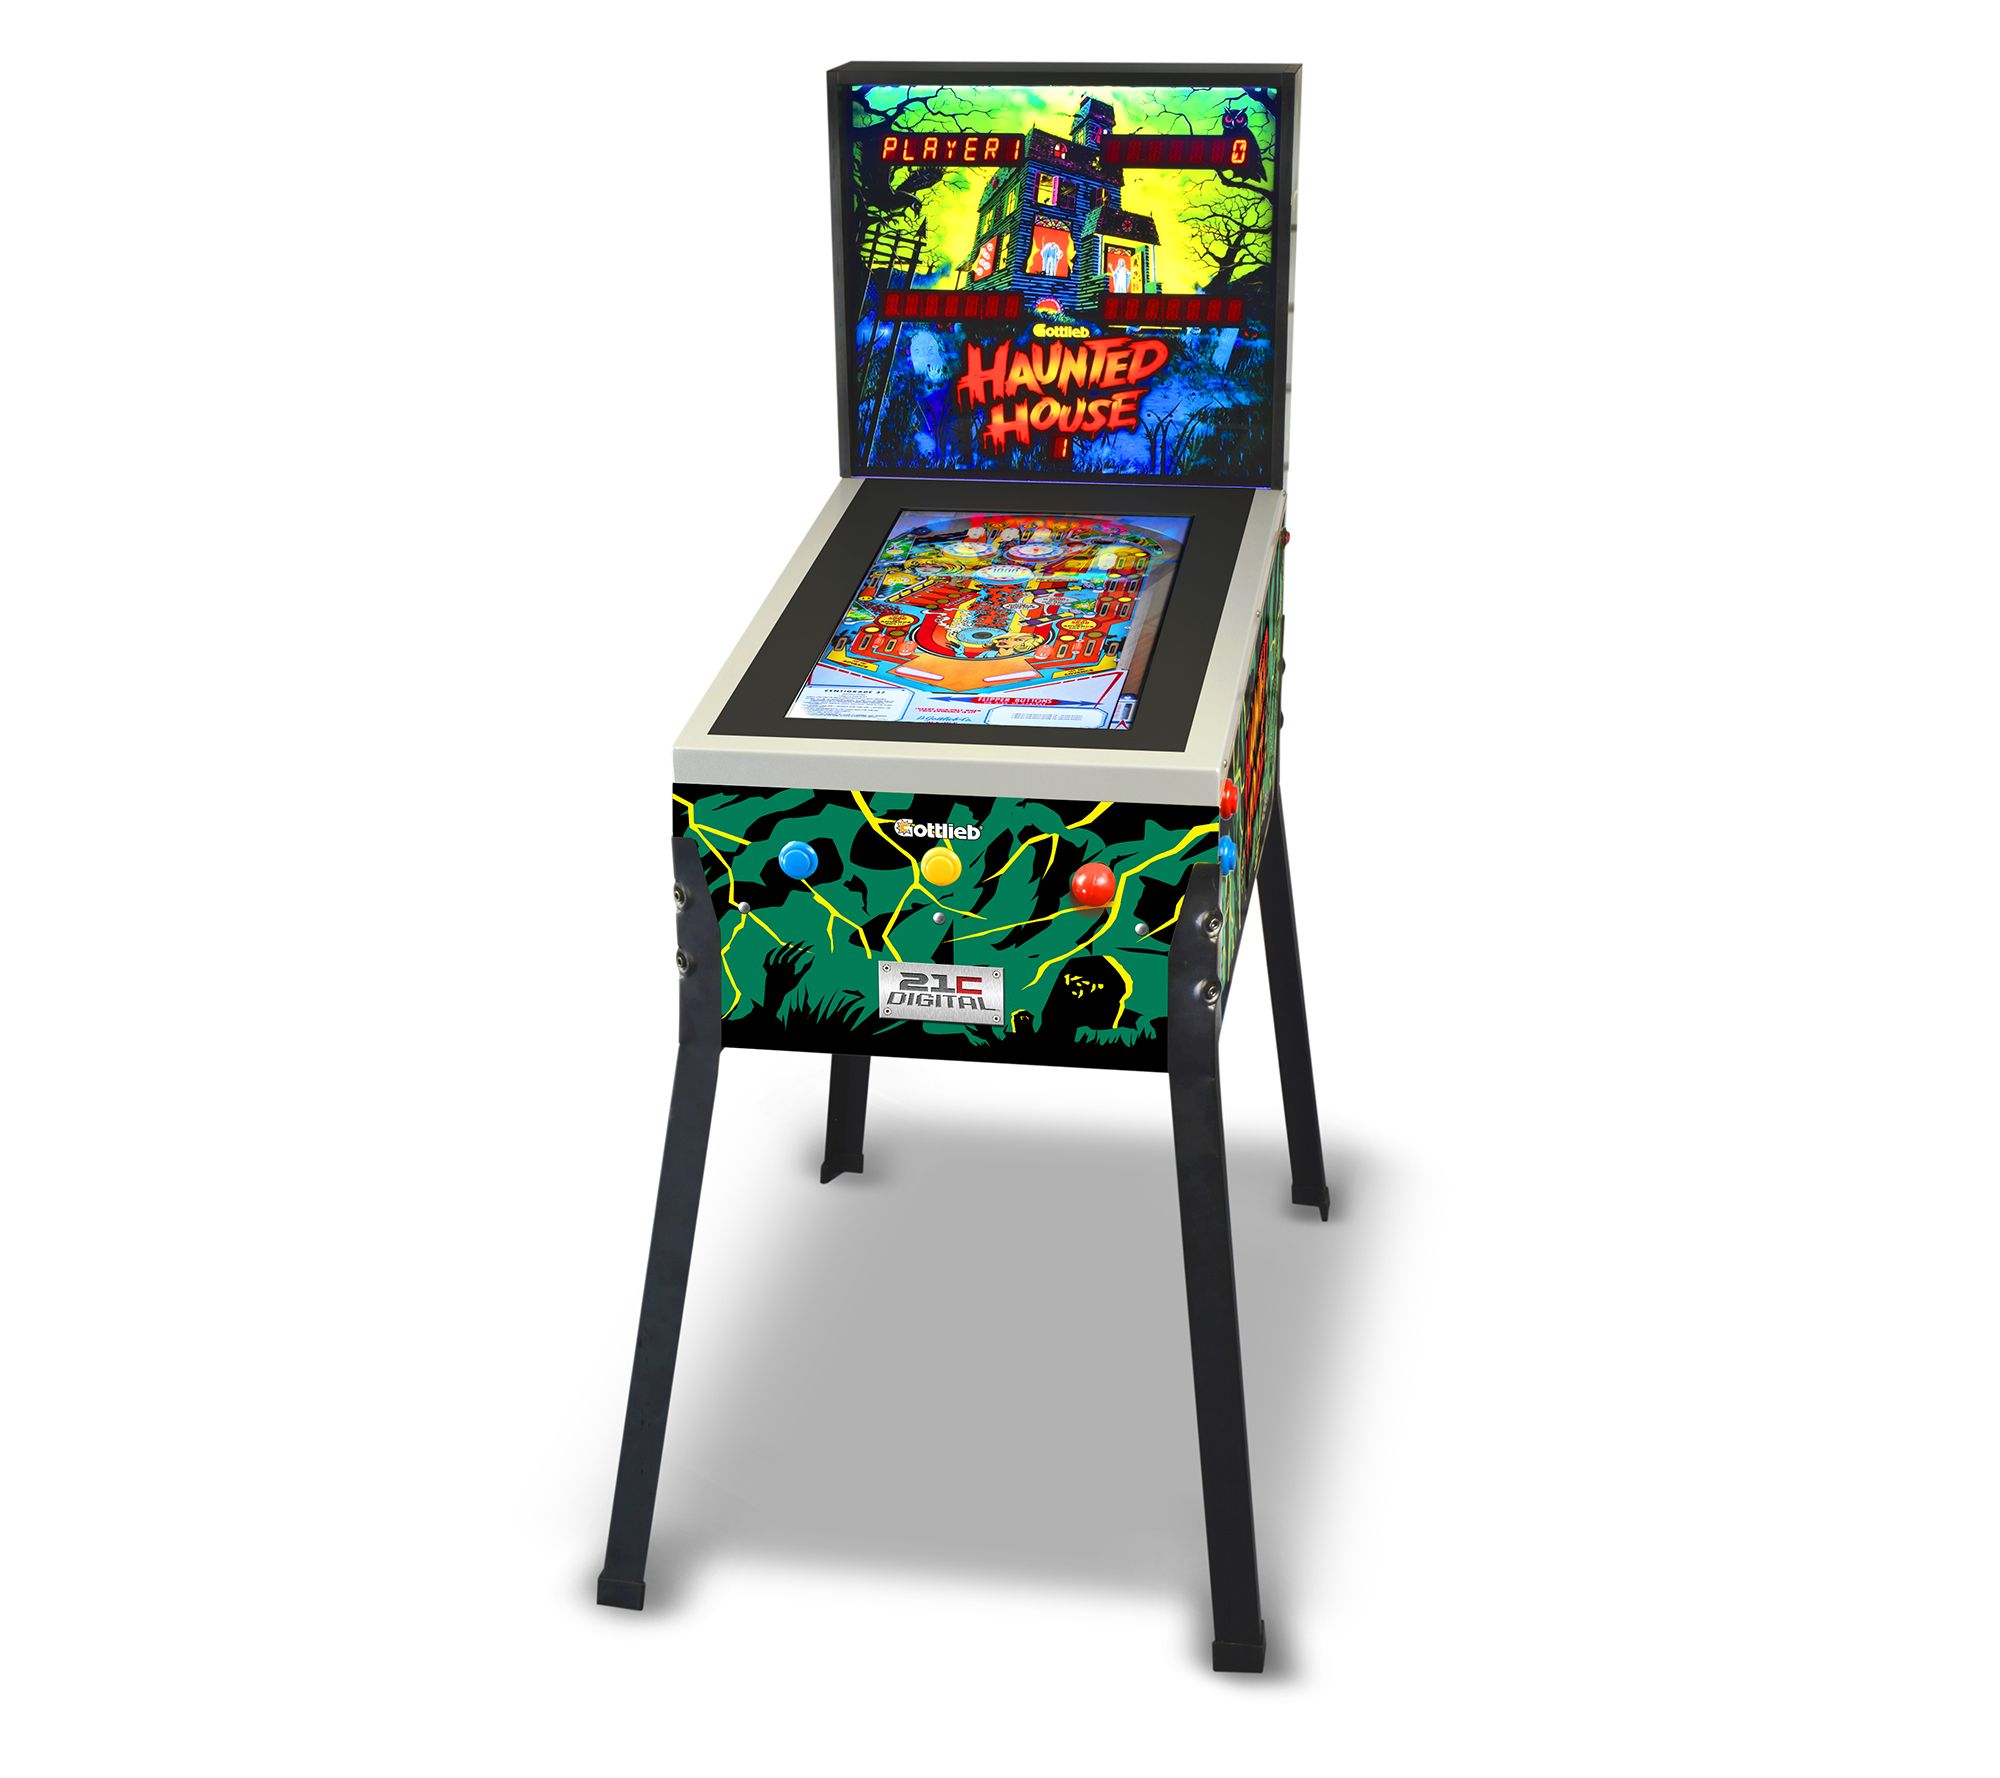 Pinball Games: Game Zoo Pinball online 